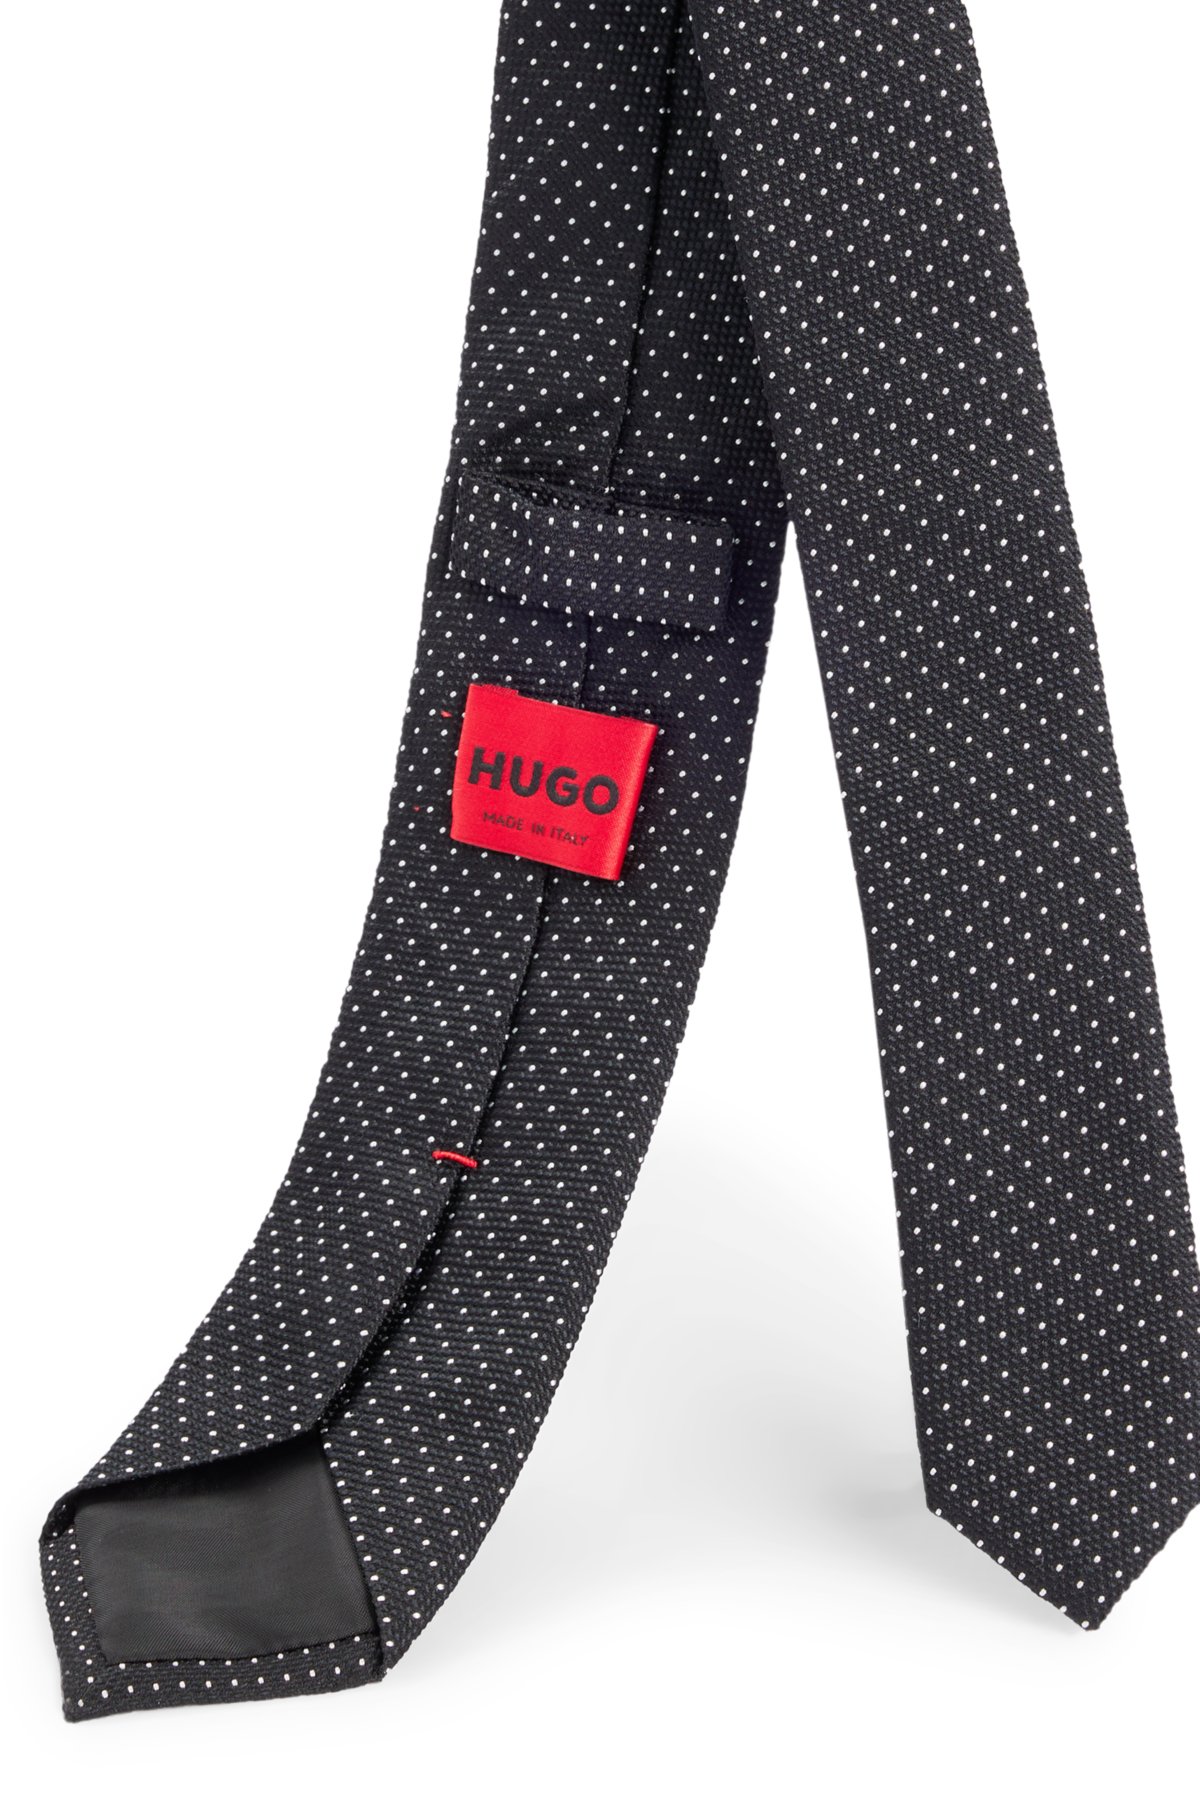 Jacquard-Muster Krawatte aus - reiner HUGO Seide mit